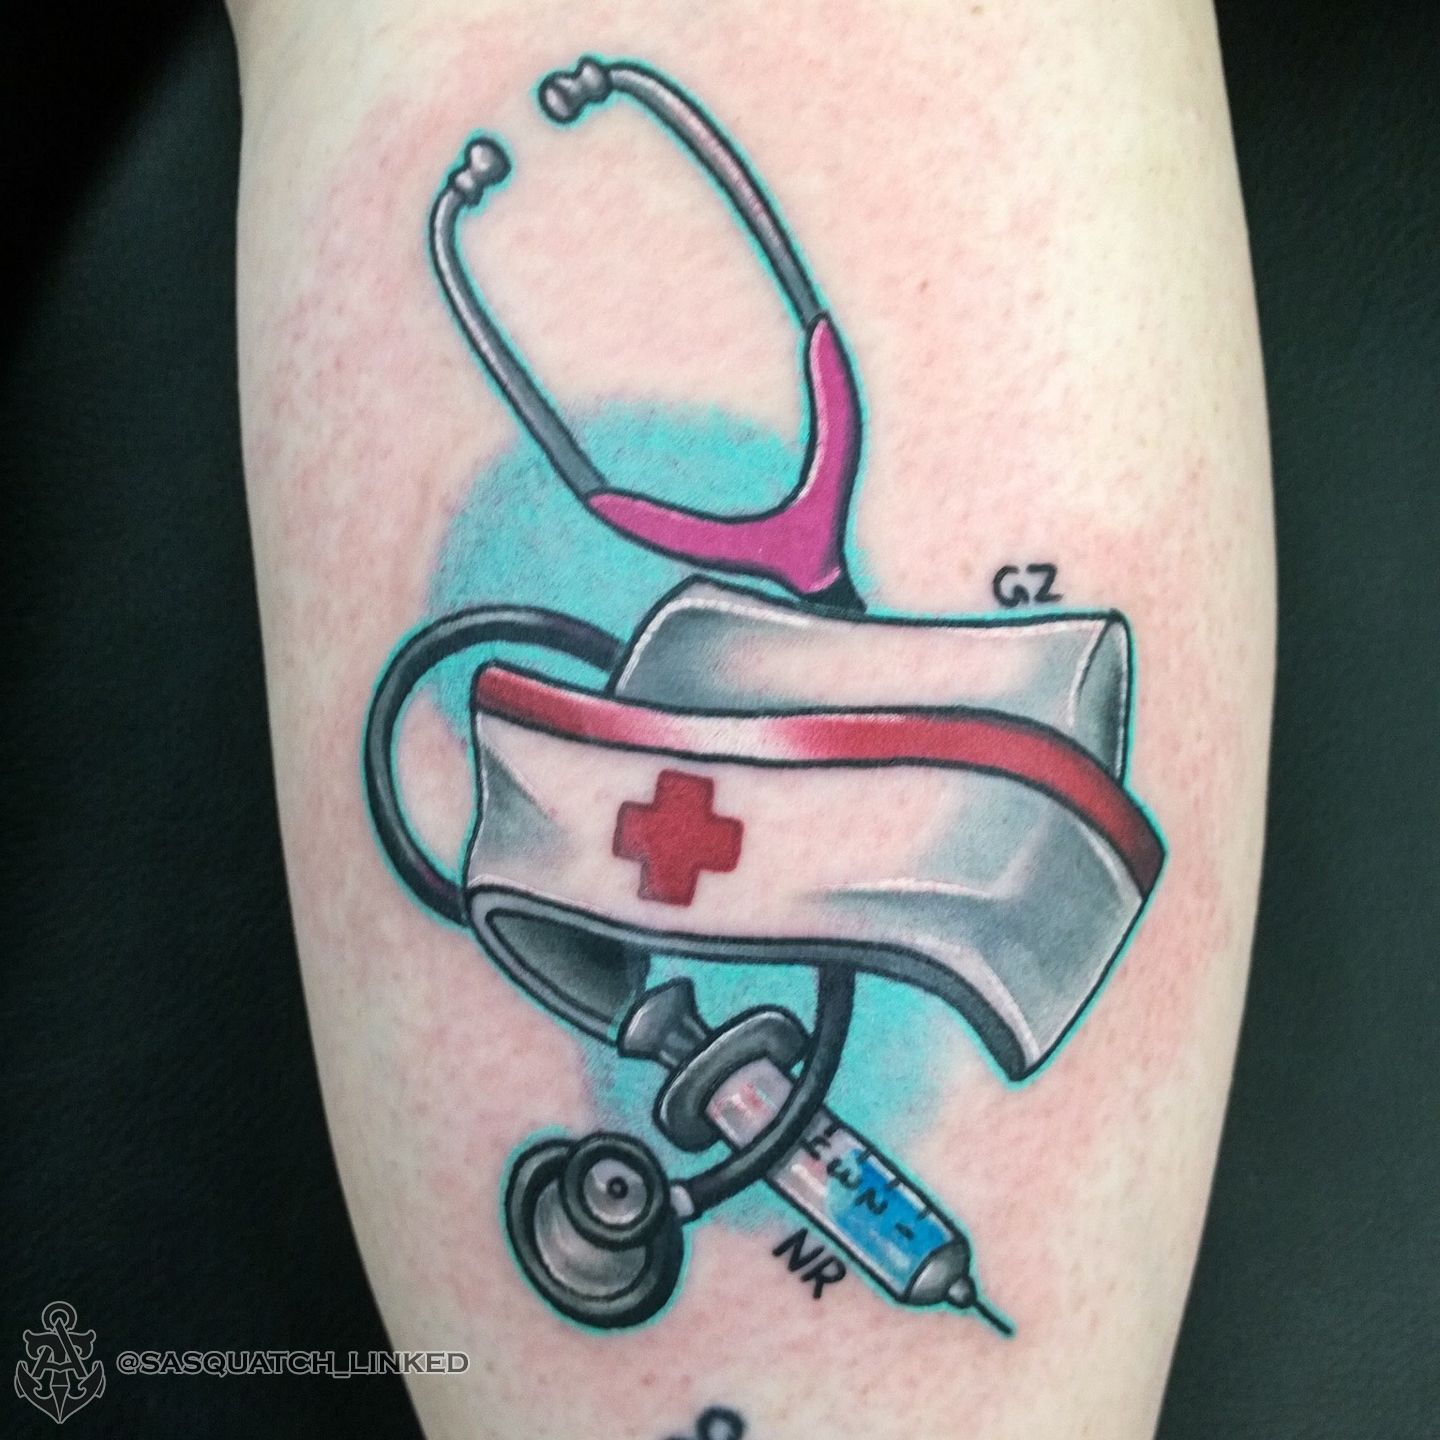 STETHOSCOPE A stethoscope is... - InkGrave Tattoo Studio | Facebook